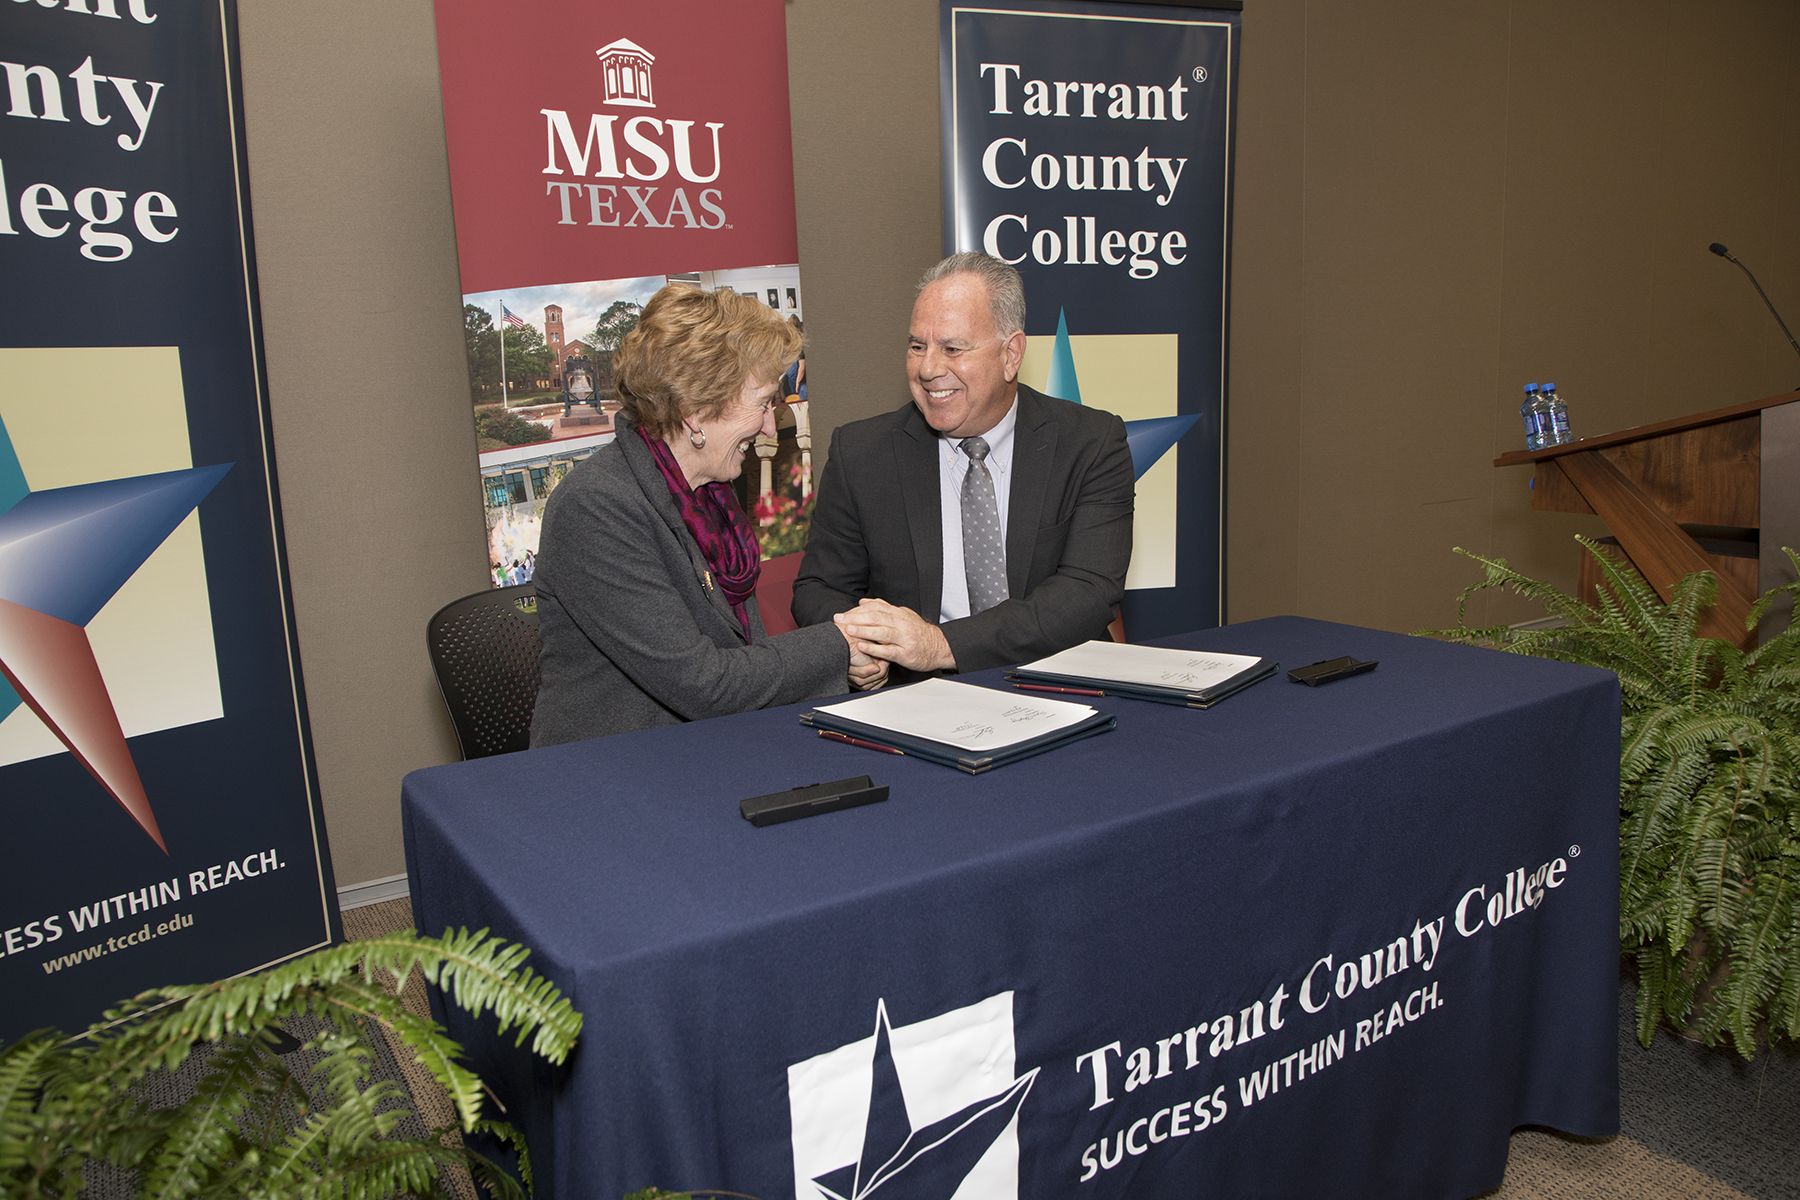 TCC MSU Texas Sign Partnership Agreements for Healthcare Programs